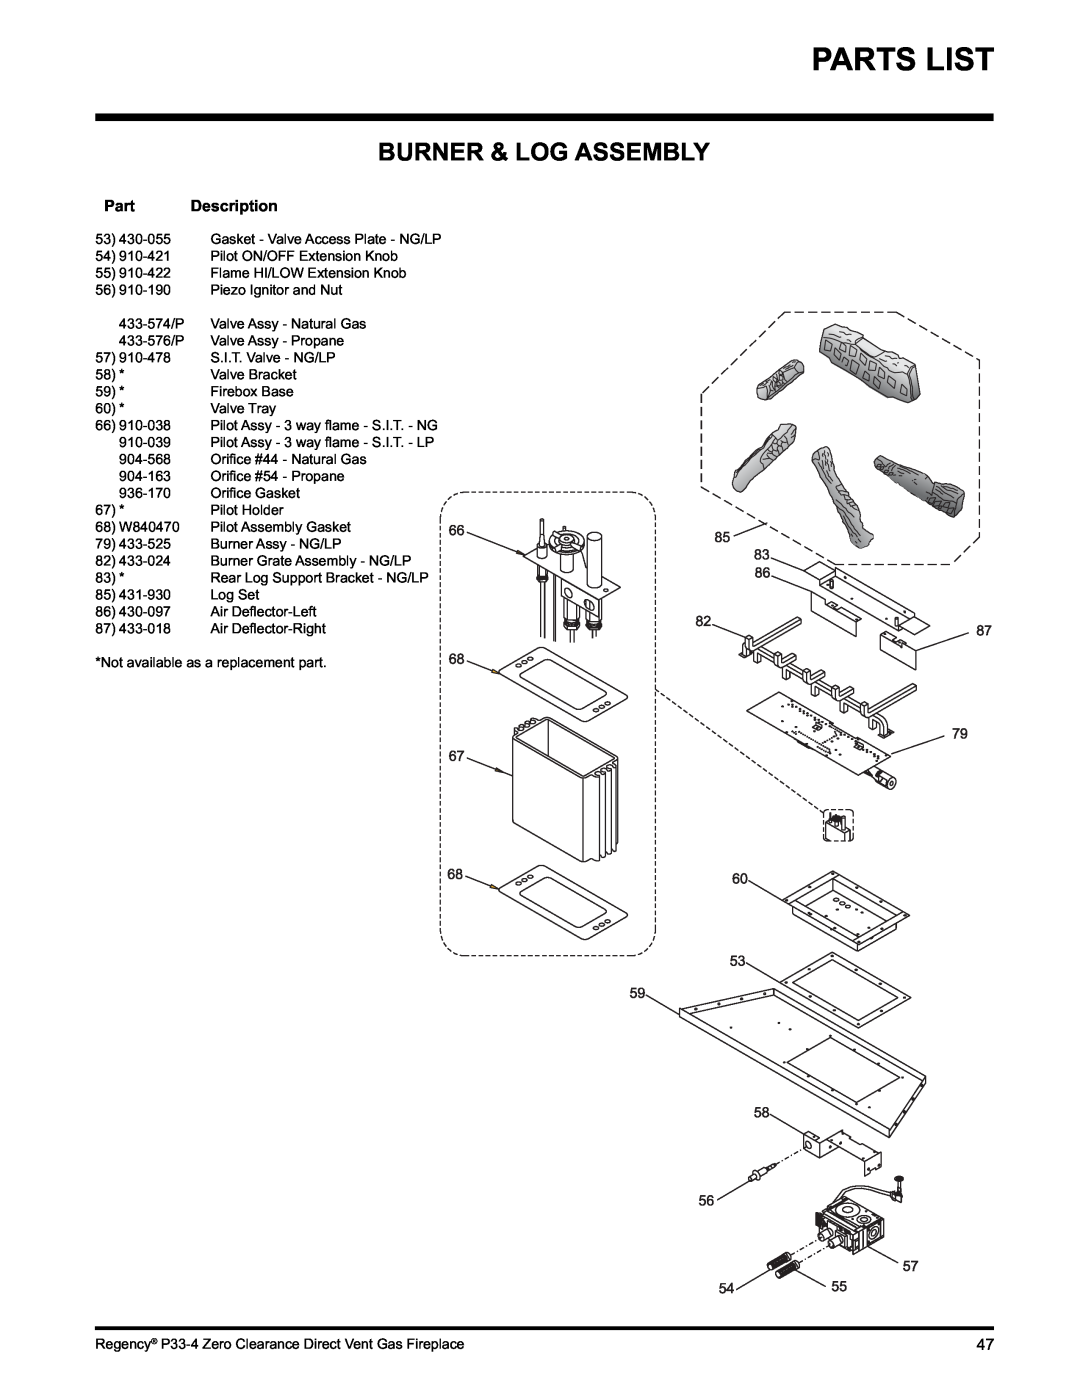 Regency P33-NG4 installation manual Burner & Log Assembly, Part Description 